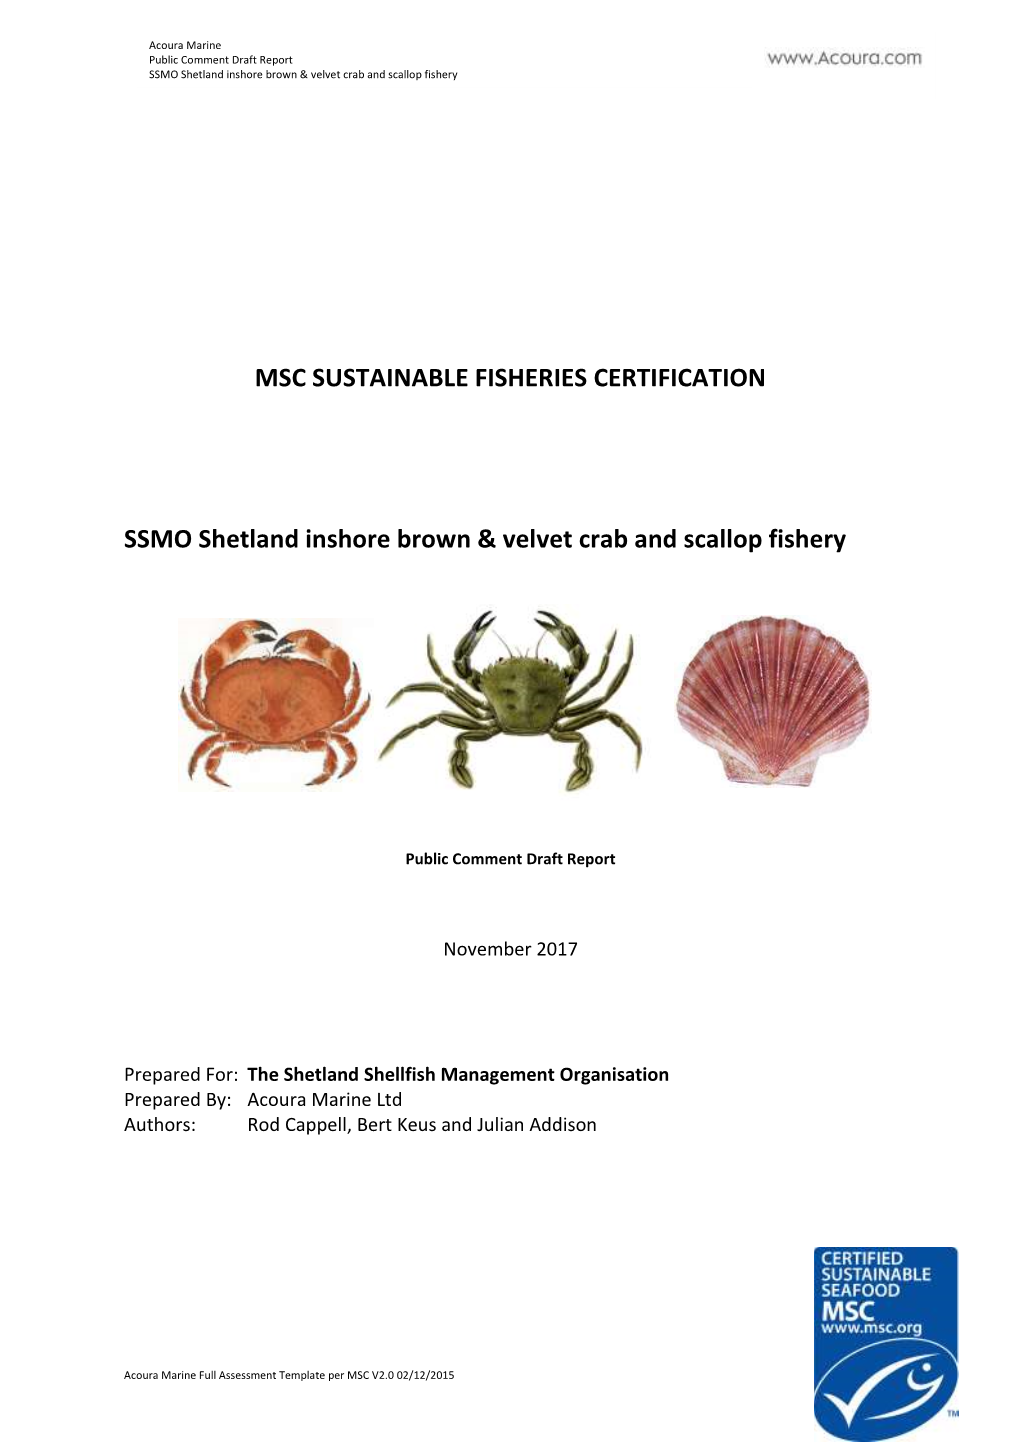 SSMO Shetland Inshore Brown & Velvet Crab and Scallop Fishery